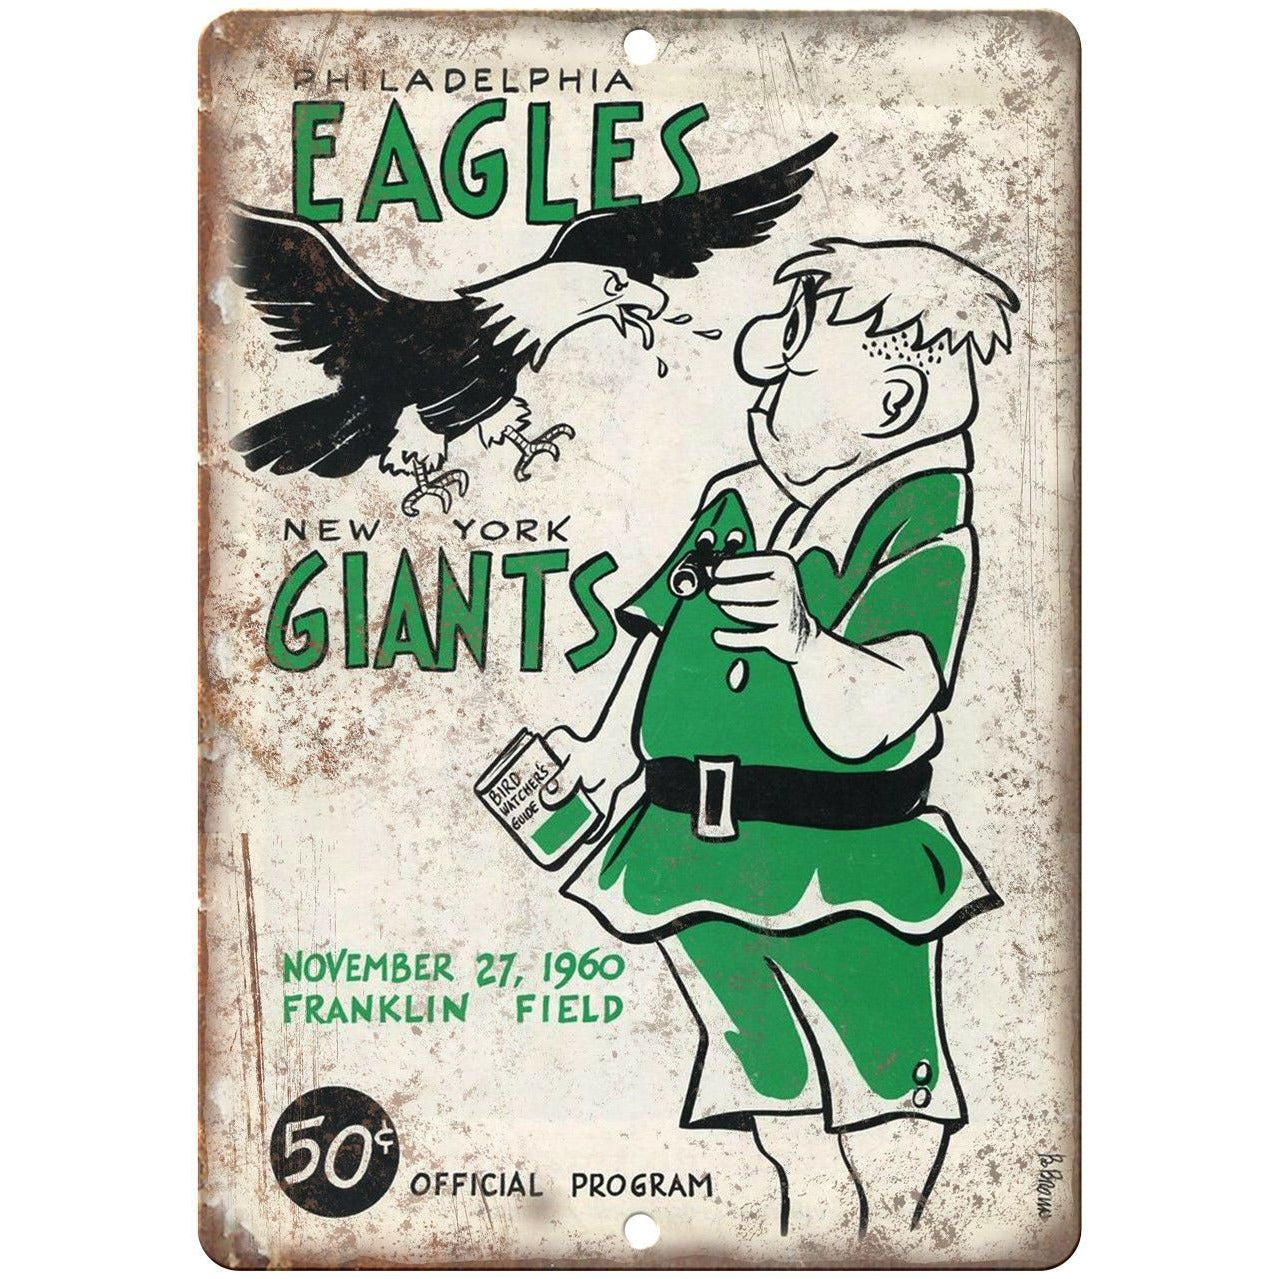 Philadelphia Eagles Memorabilia, Eagles Signed Collectibles